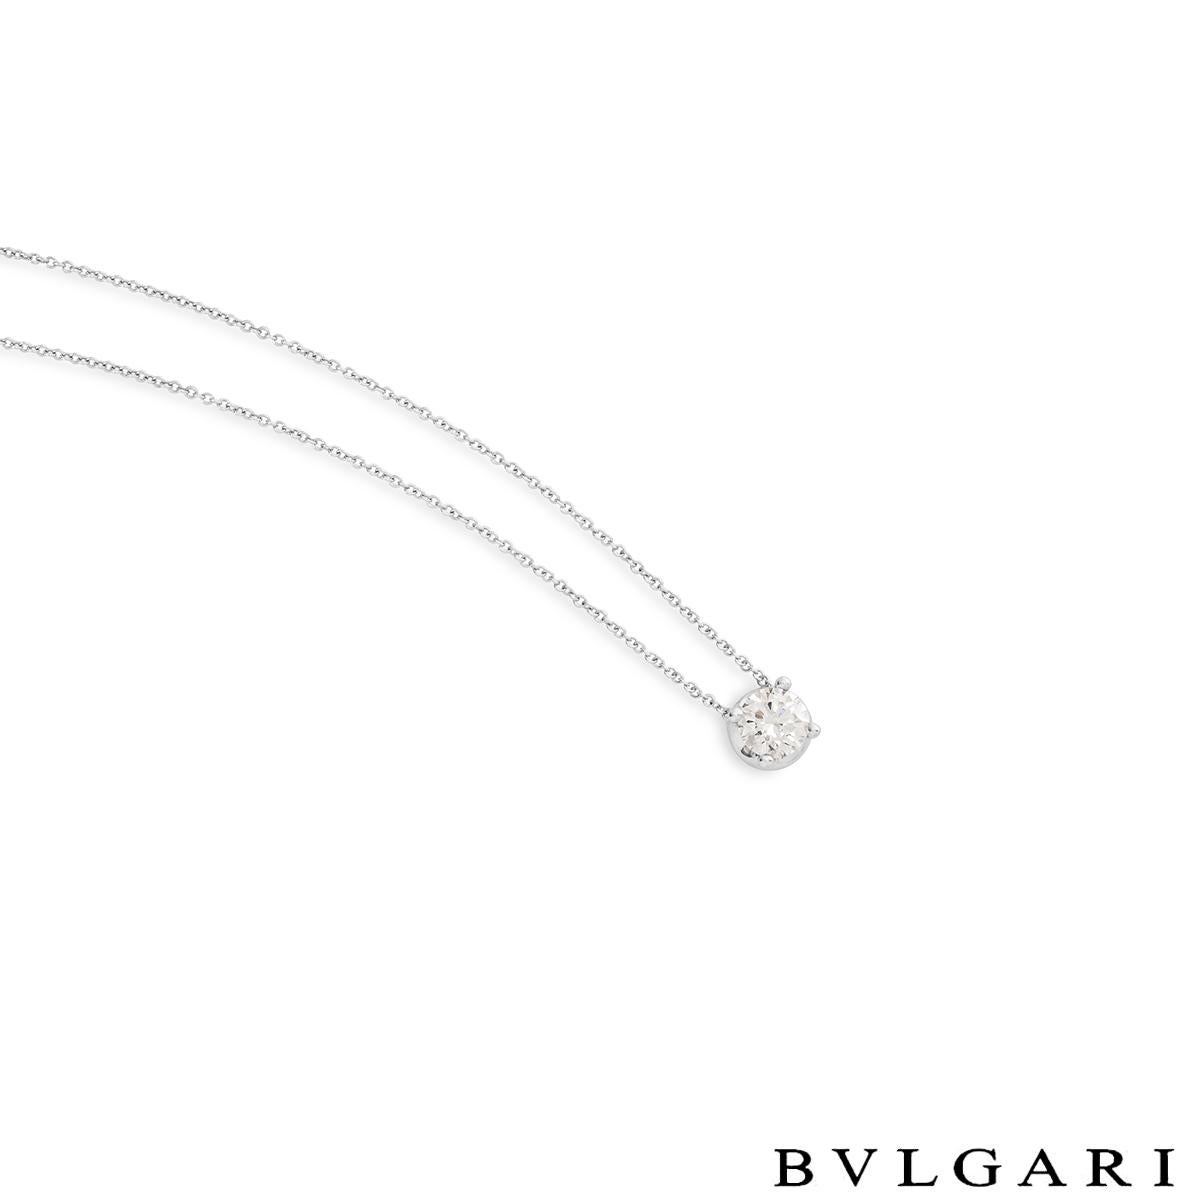 Taille ronde Bvlgari Collier couronne en diamants 1,02 carat certifié GIA en vente